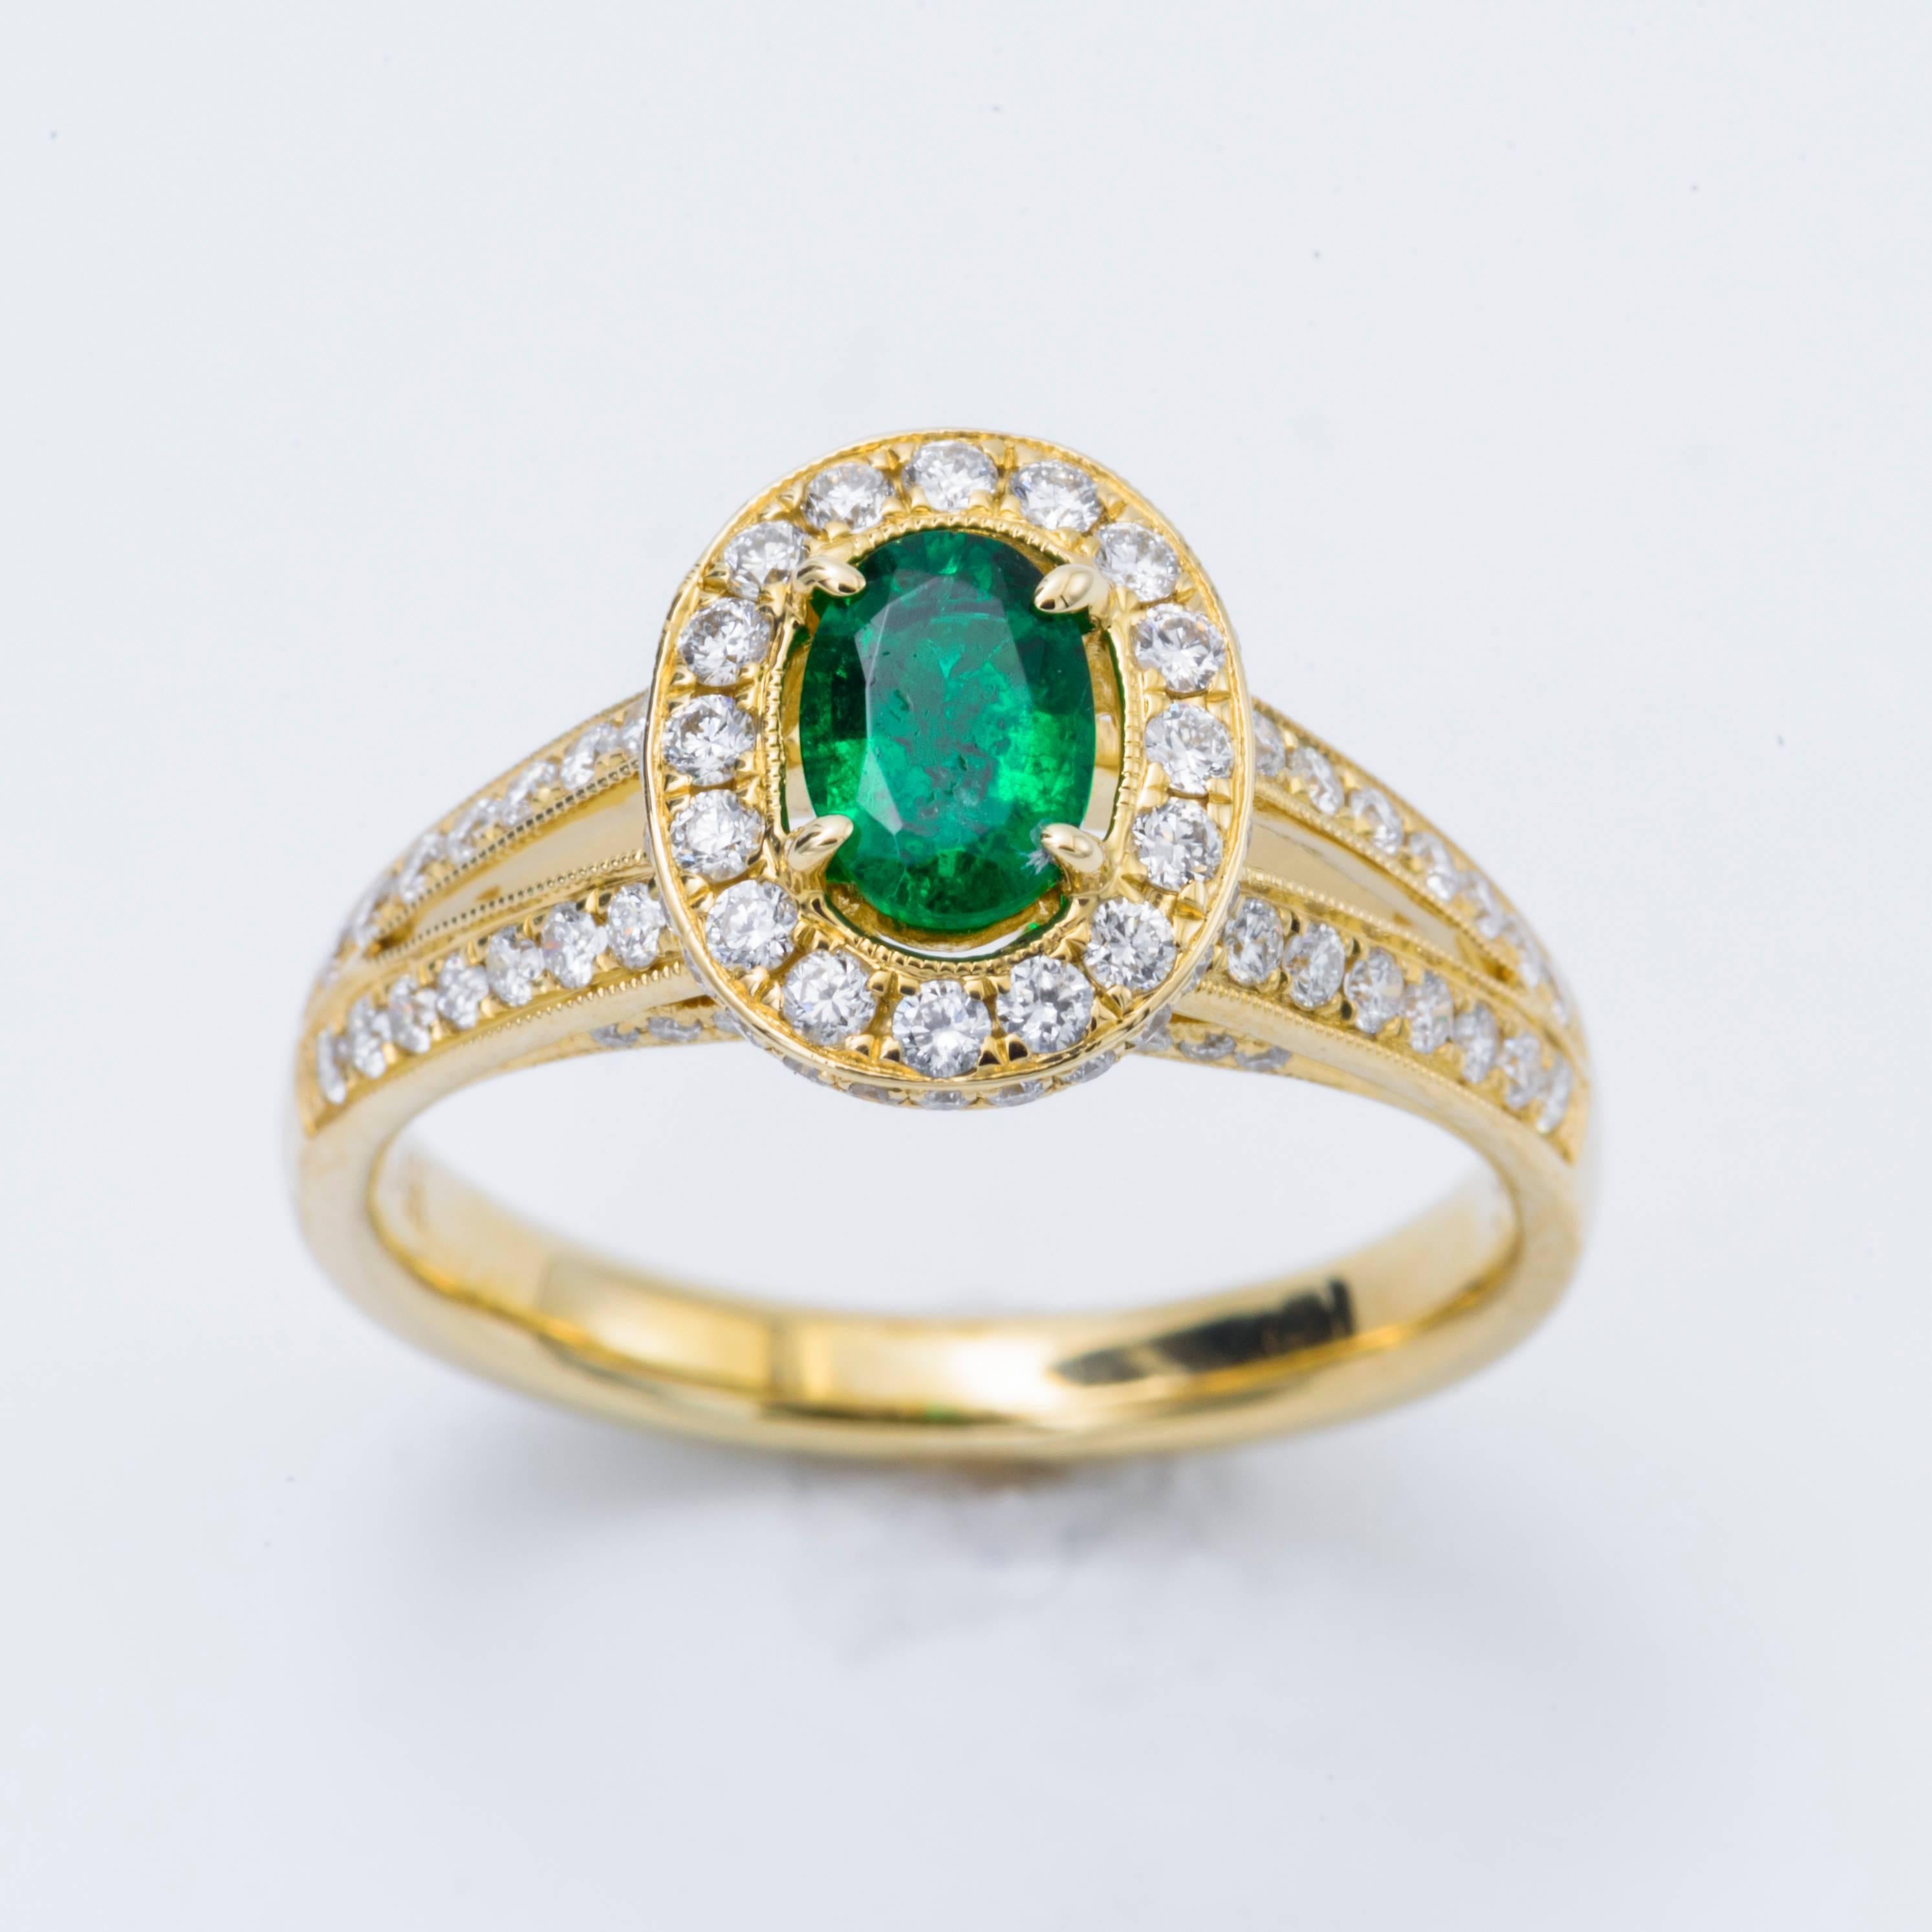 Style: 14k Yellow gold Oval  Shape Zambian Emerald  Diamond Halo Engagement Ring
Material: 14k Yellow Gold
Gemstone Details: 1 Oval Shape Emerald approximately 0.54 ct. 6x4 mm
Diamond Details: Approximately 0.66 ctw of diamonds. Diamonds are G/H in